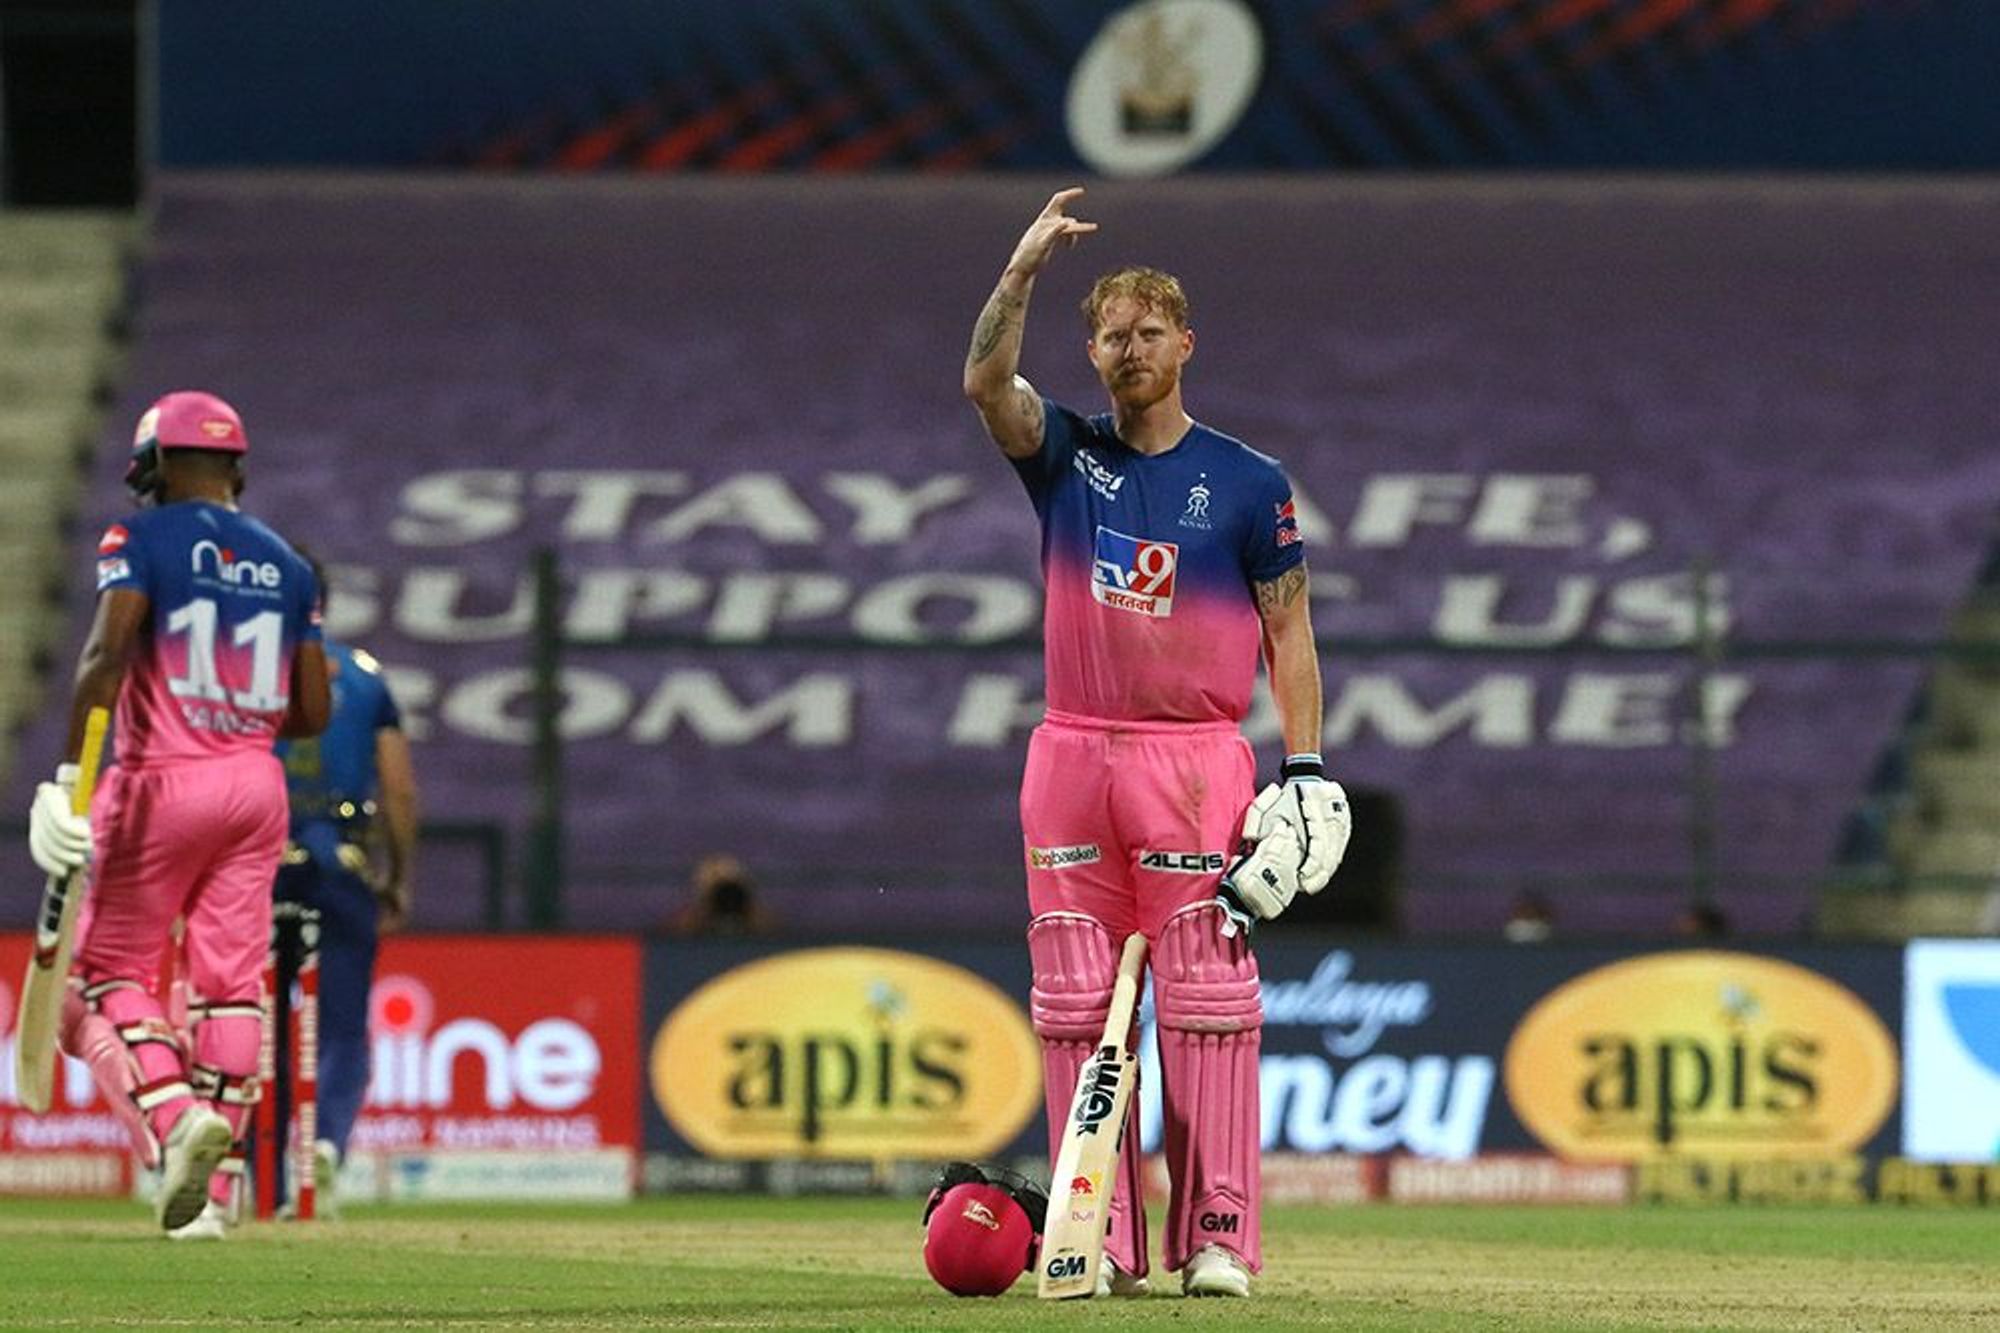 Ben Stokes scored 107* runs off 60 balls against MI in Abu Dhabi. (Photo - BCCI / IPL) 